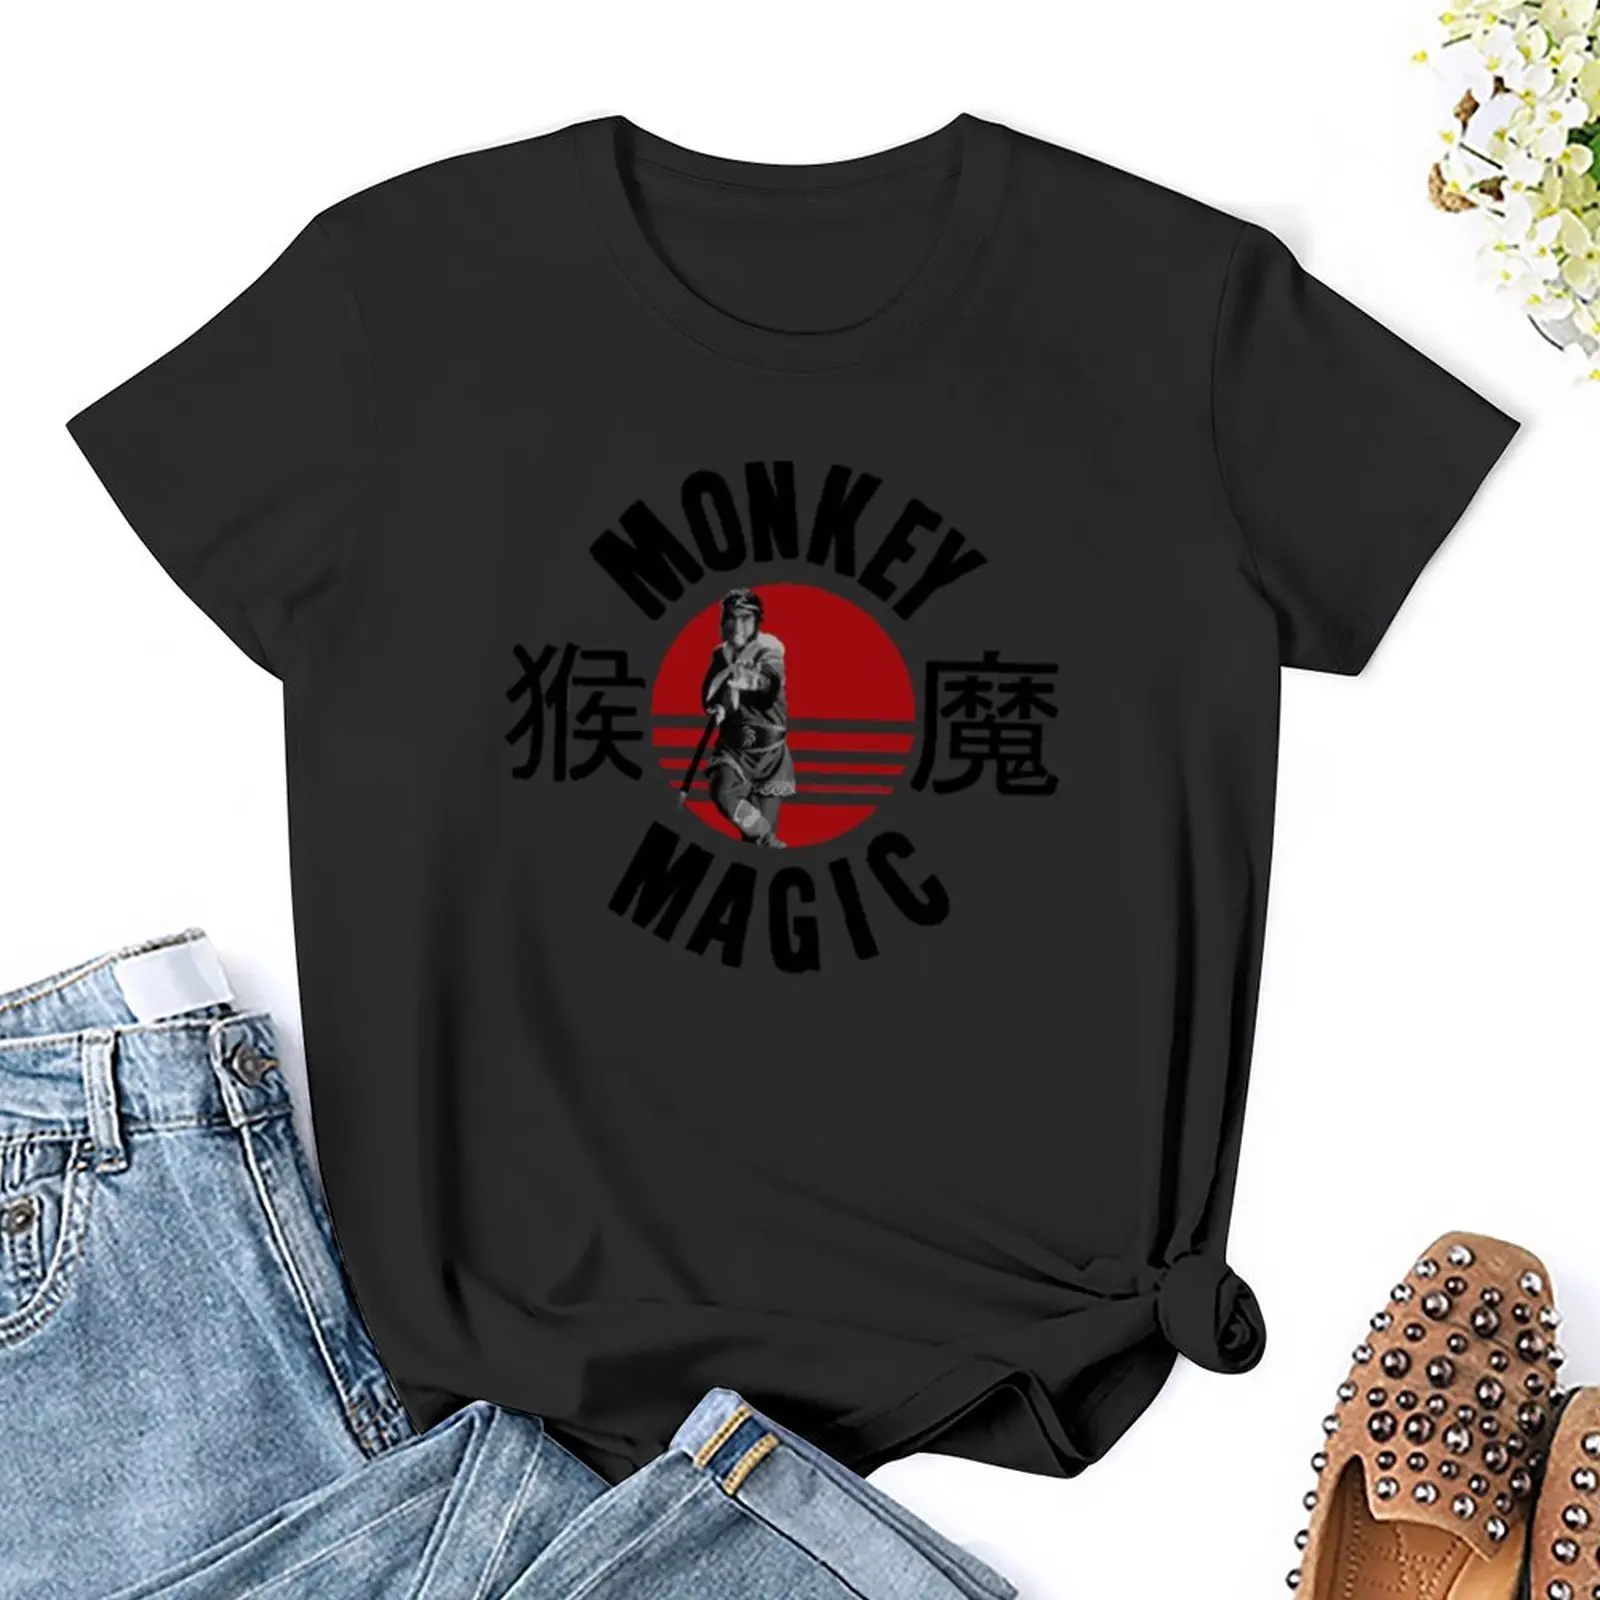 Футболки Monkey Magic, футболки с графическими принтами, футболки для женщин